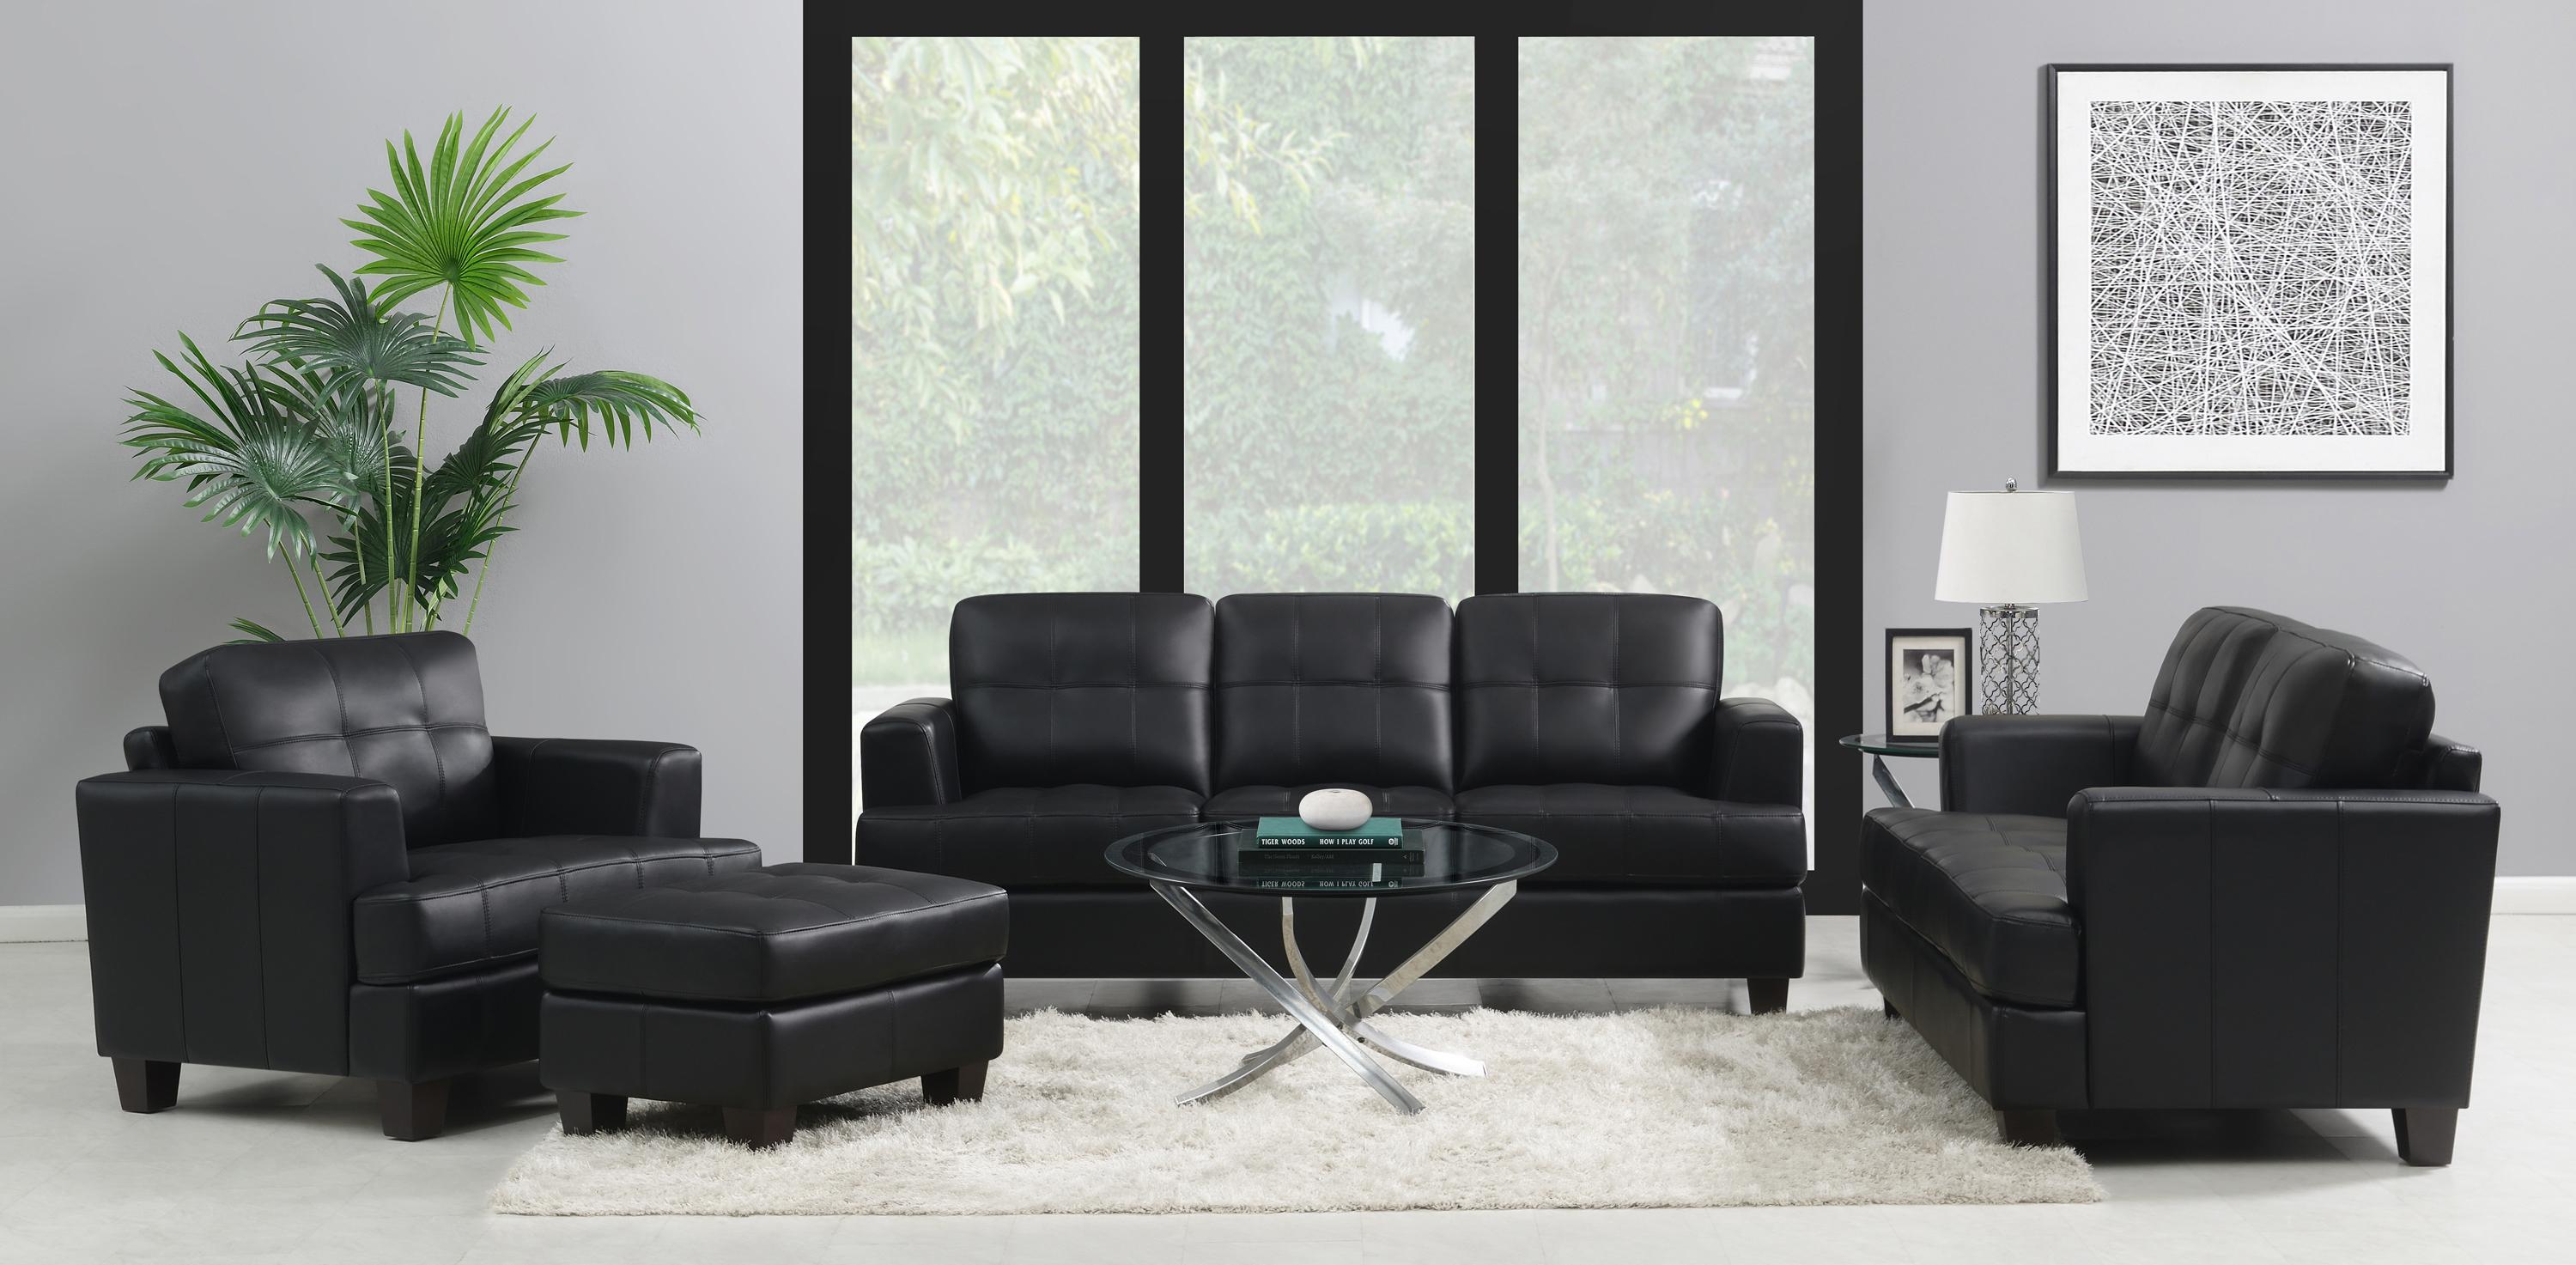 Transitional Living Room Set 501681-S2 Samuel 501681-S2 in Black Leatherette